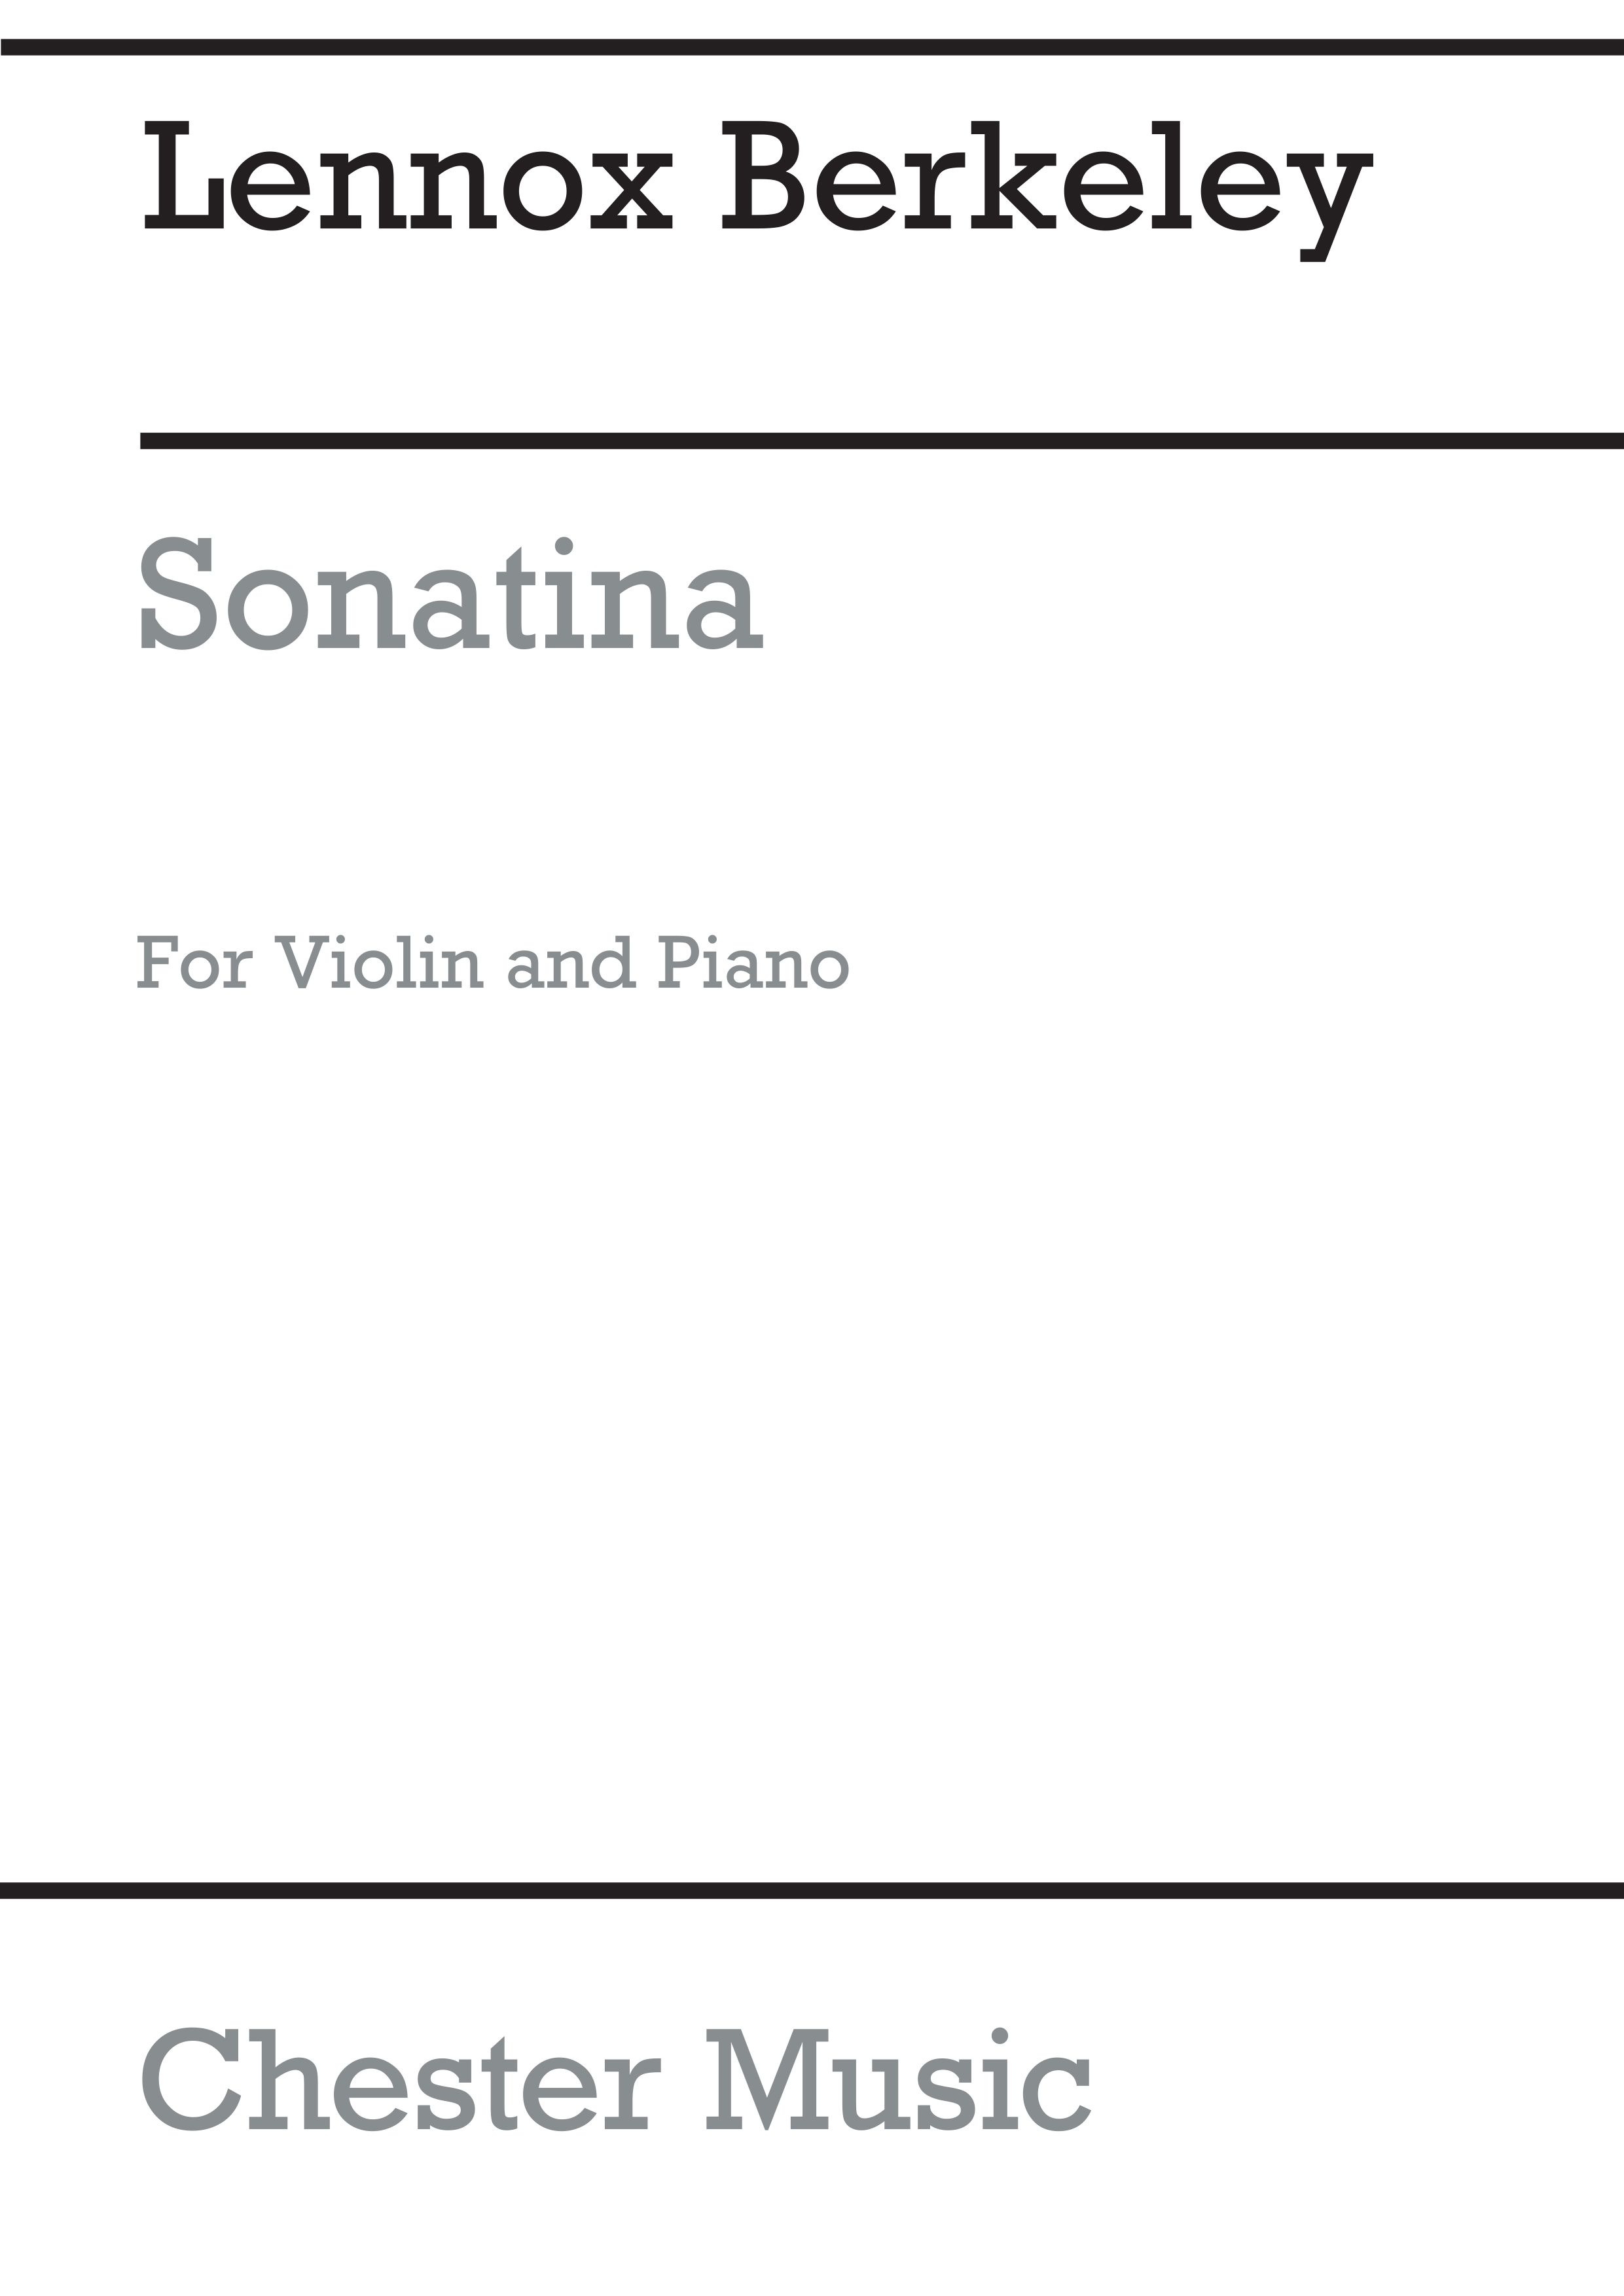 Lennox Berkeley: Sonatina For Violin and Piano: Violin: Instrumental Work